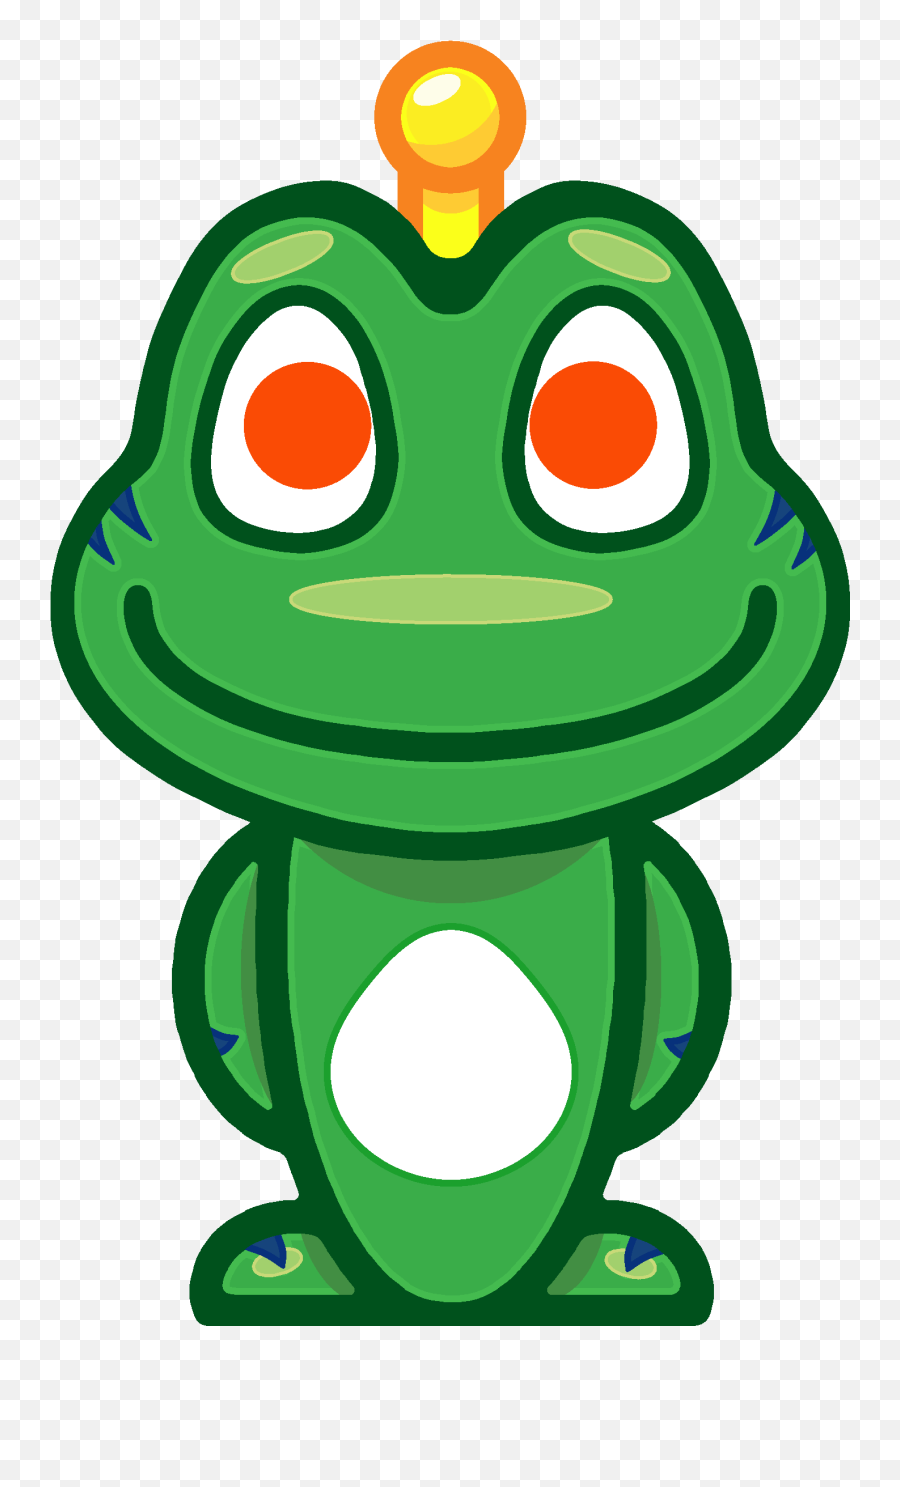 New And Improved Hd Snoo - Reddit Nba Emoji,Geocaching Logo